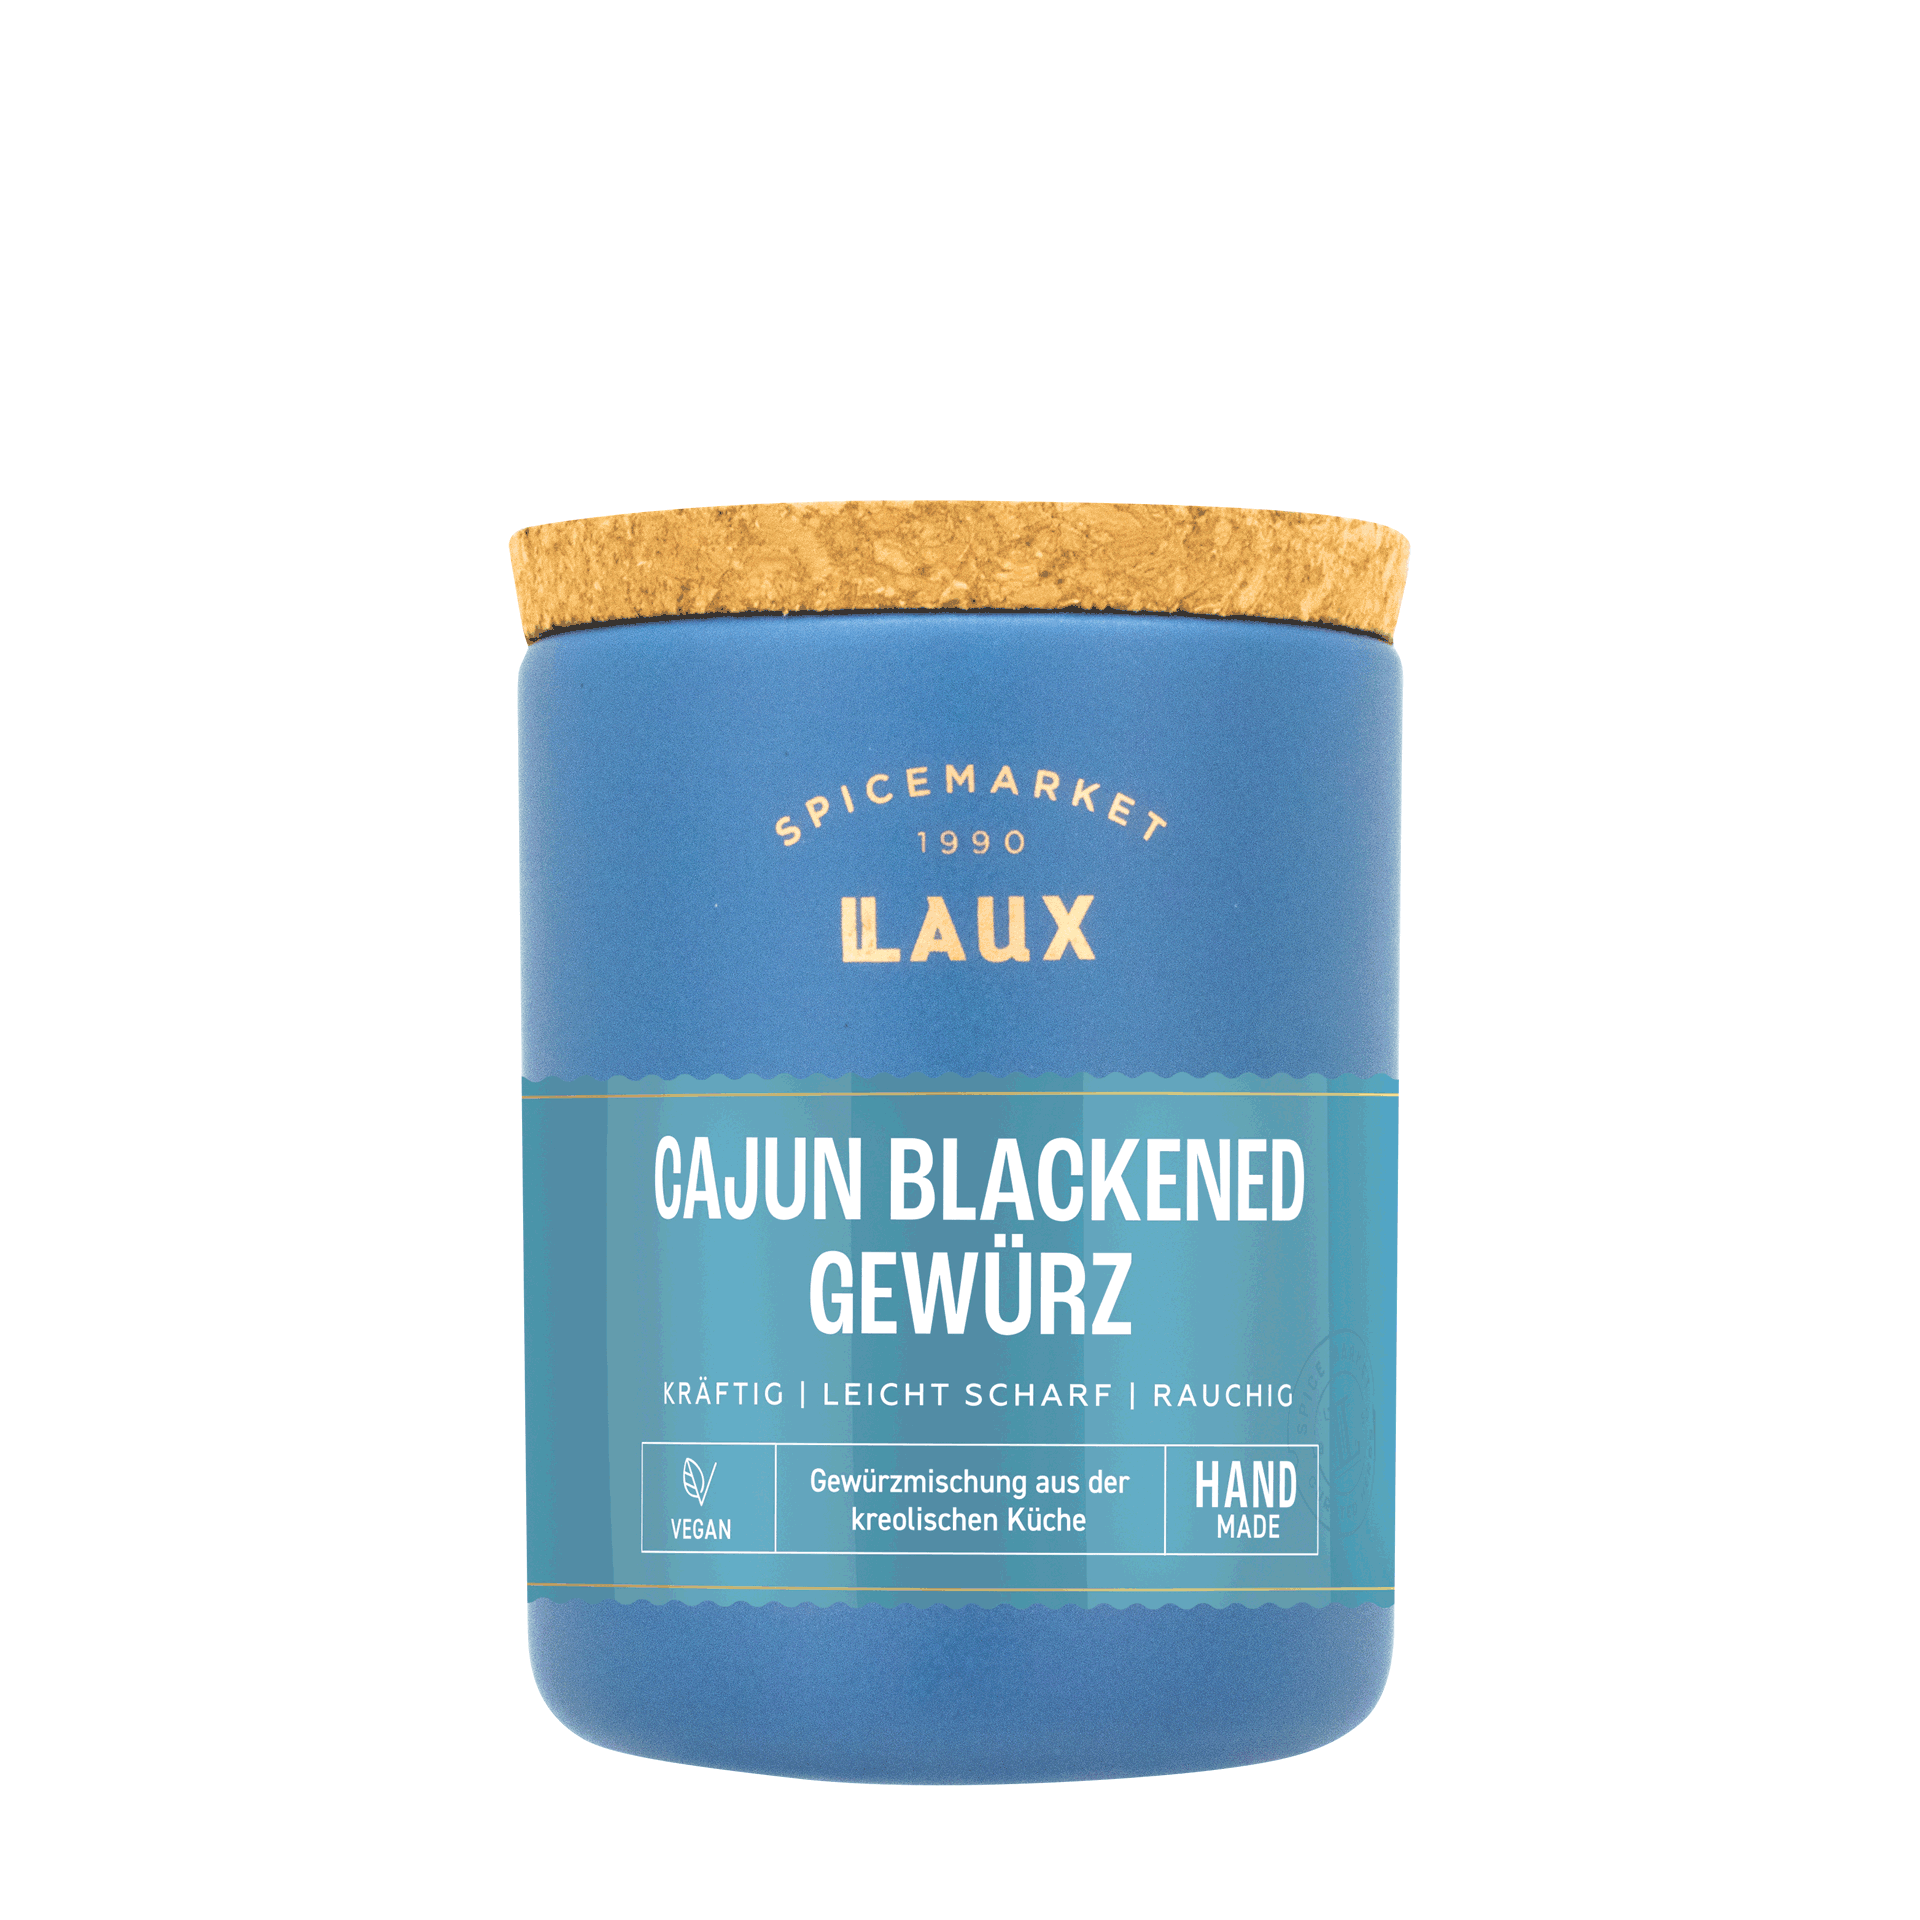 Cajun Blackened Gewürz im Keramiktopf